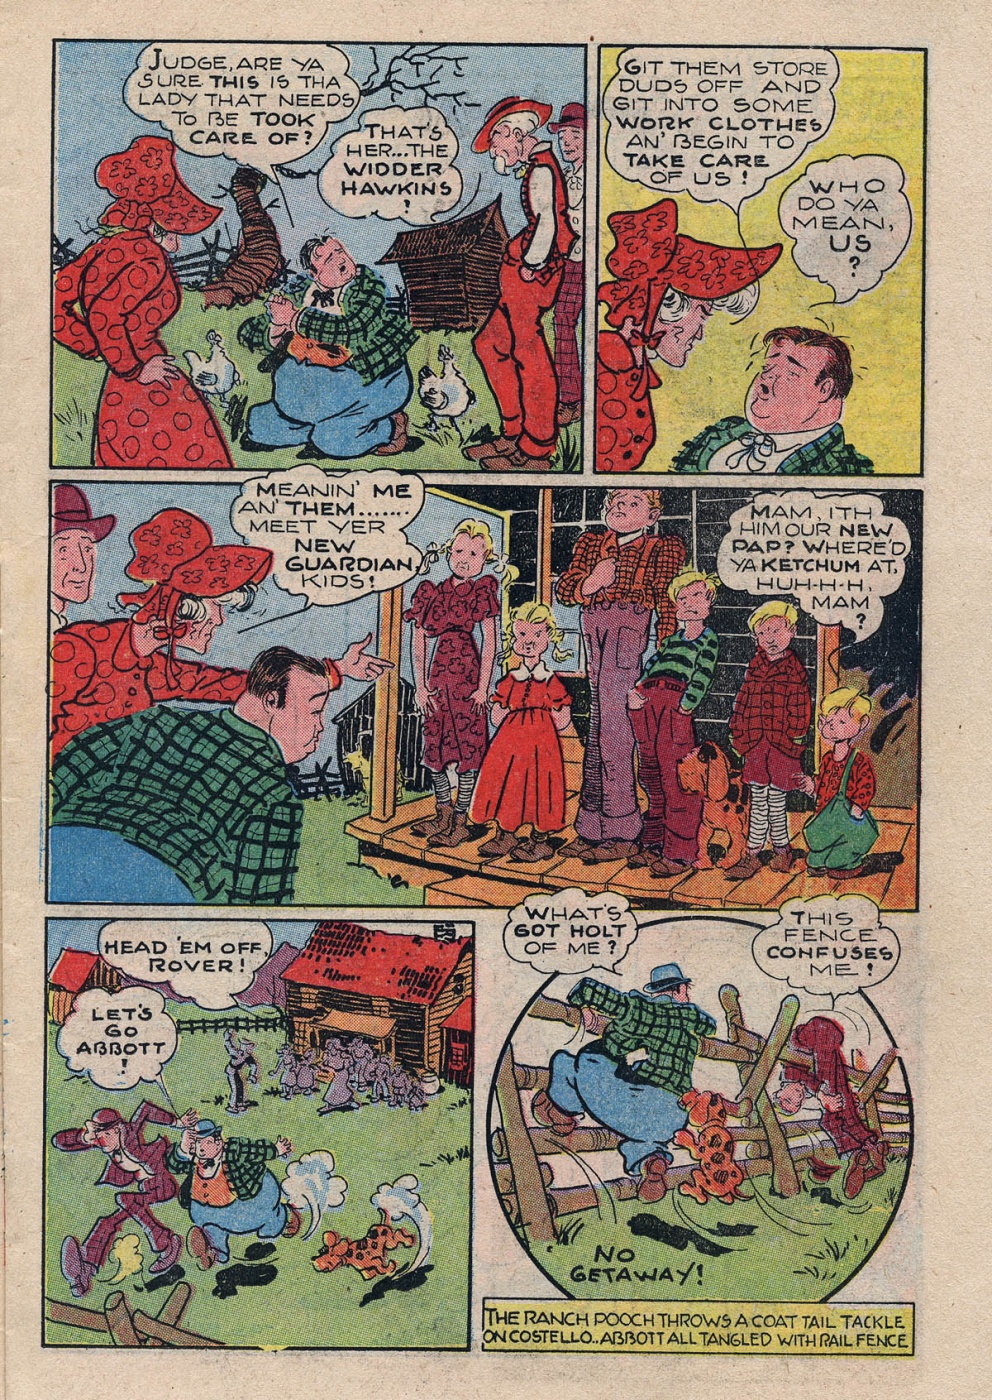 Funny Comic Strips - Abbott and Costello 001 (Feb 1948) 11